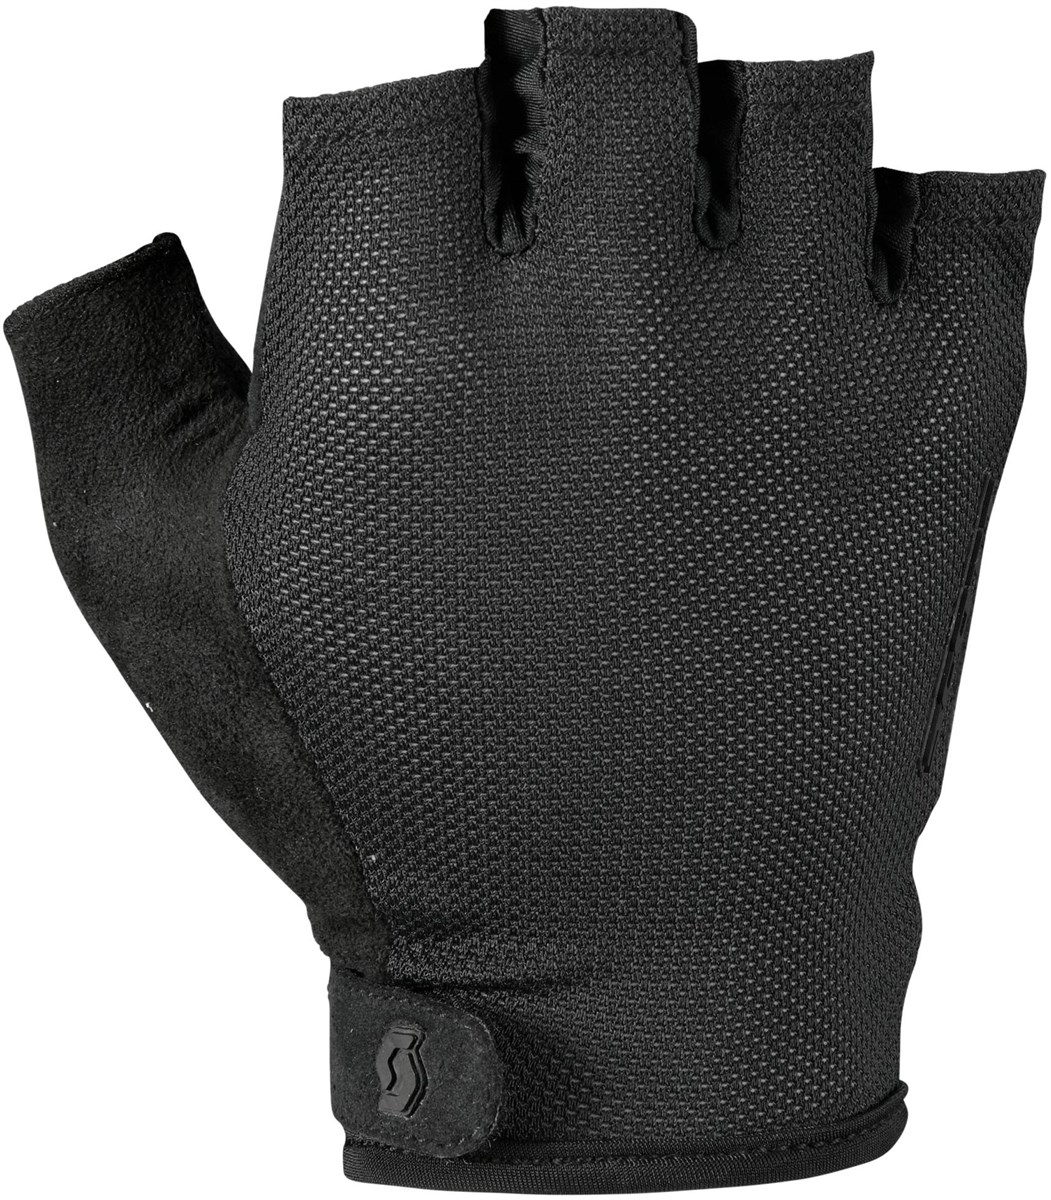 Scott Aspect Sport Short Finger Cycling Gloves